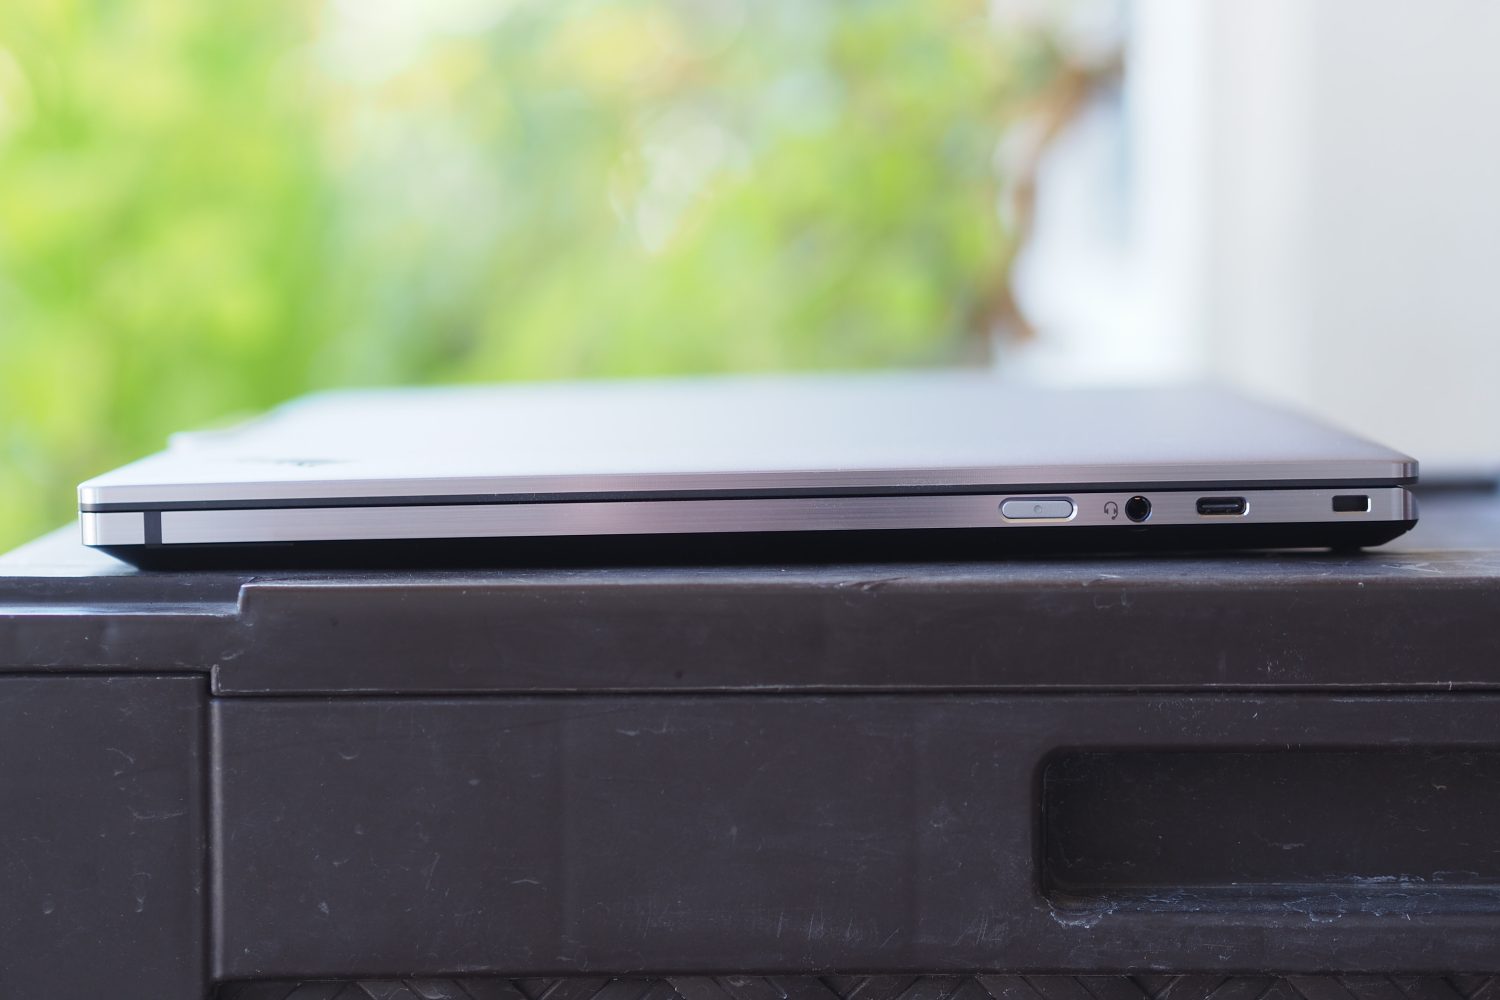 Vista lateral direita do Lenovo ThinkPad Z16 mostrando as portas.